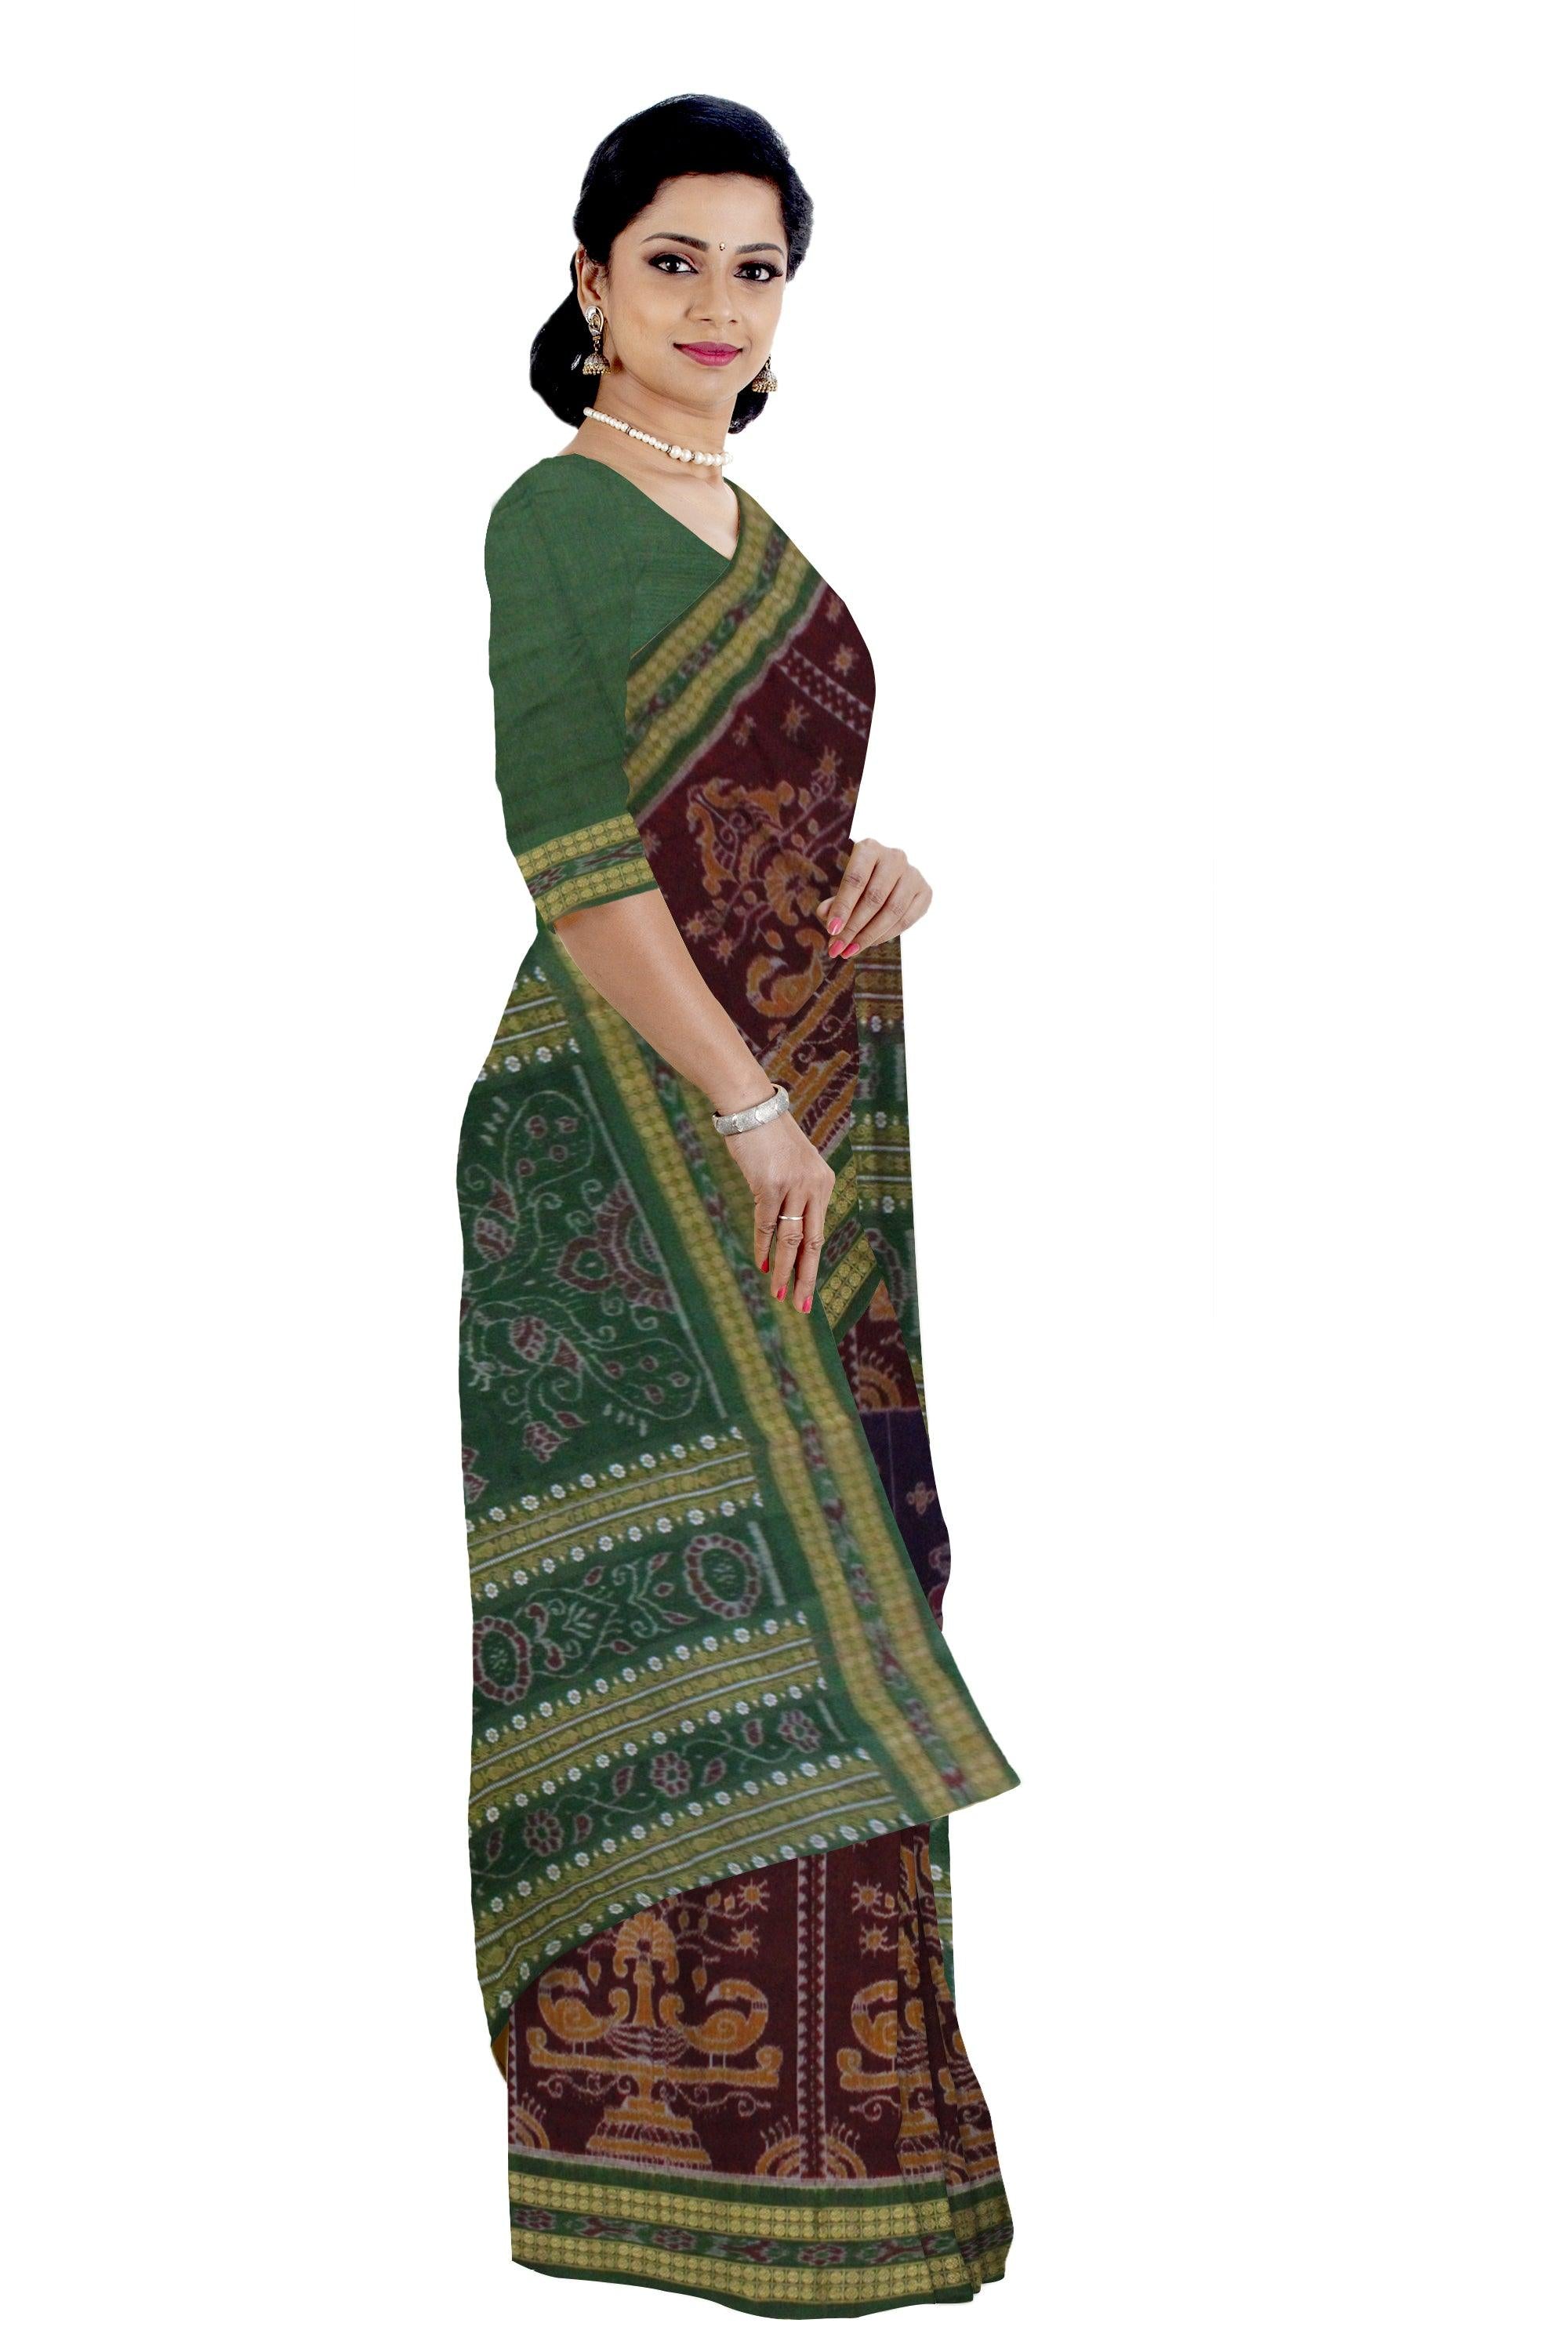 Nartaki design Sambalpuri cotton saree  in dark Maroon and Blue color. - Koshali Arts & Crafts Enterprise